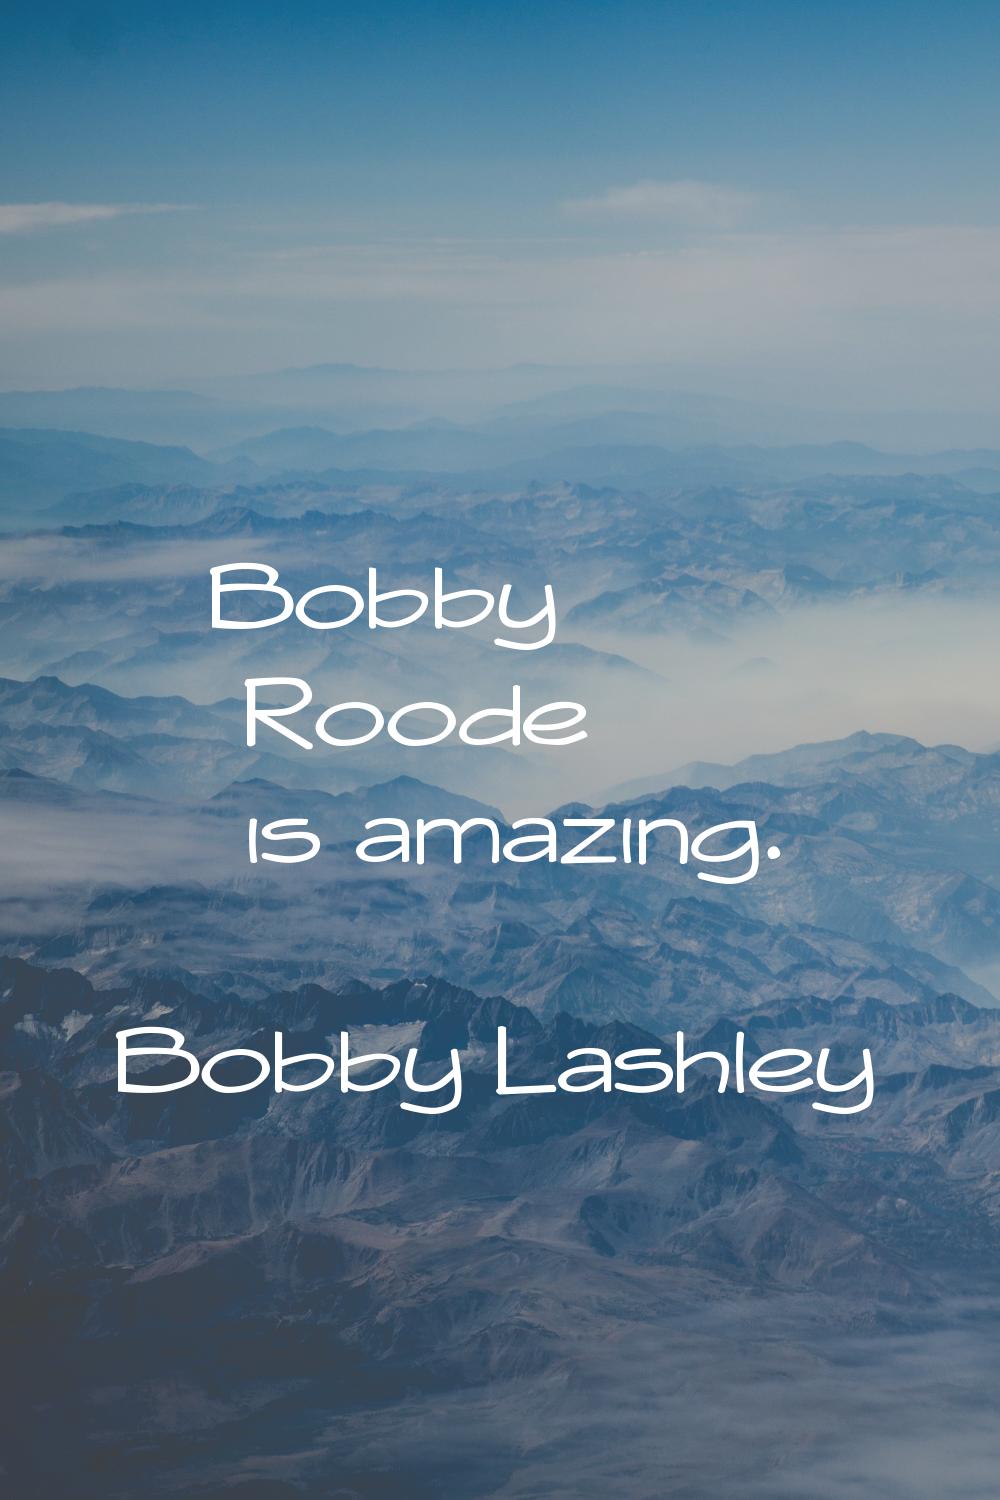 Bobby Roode is amazing.